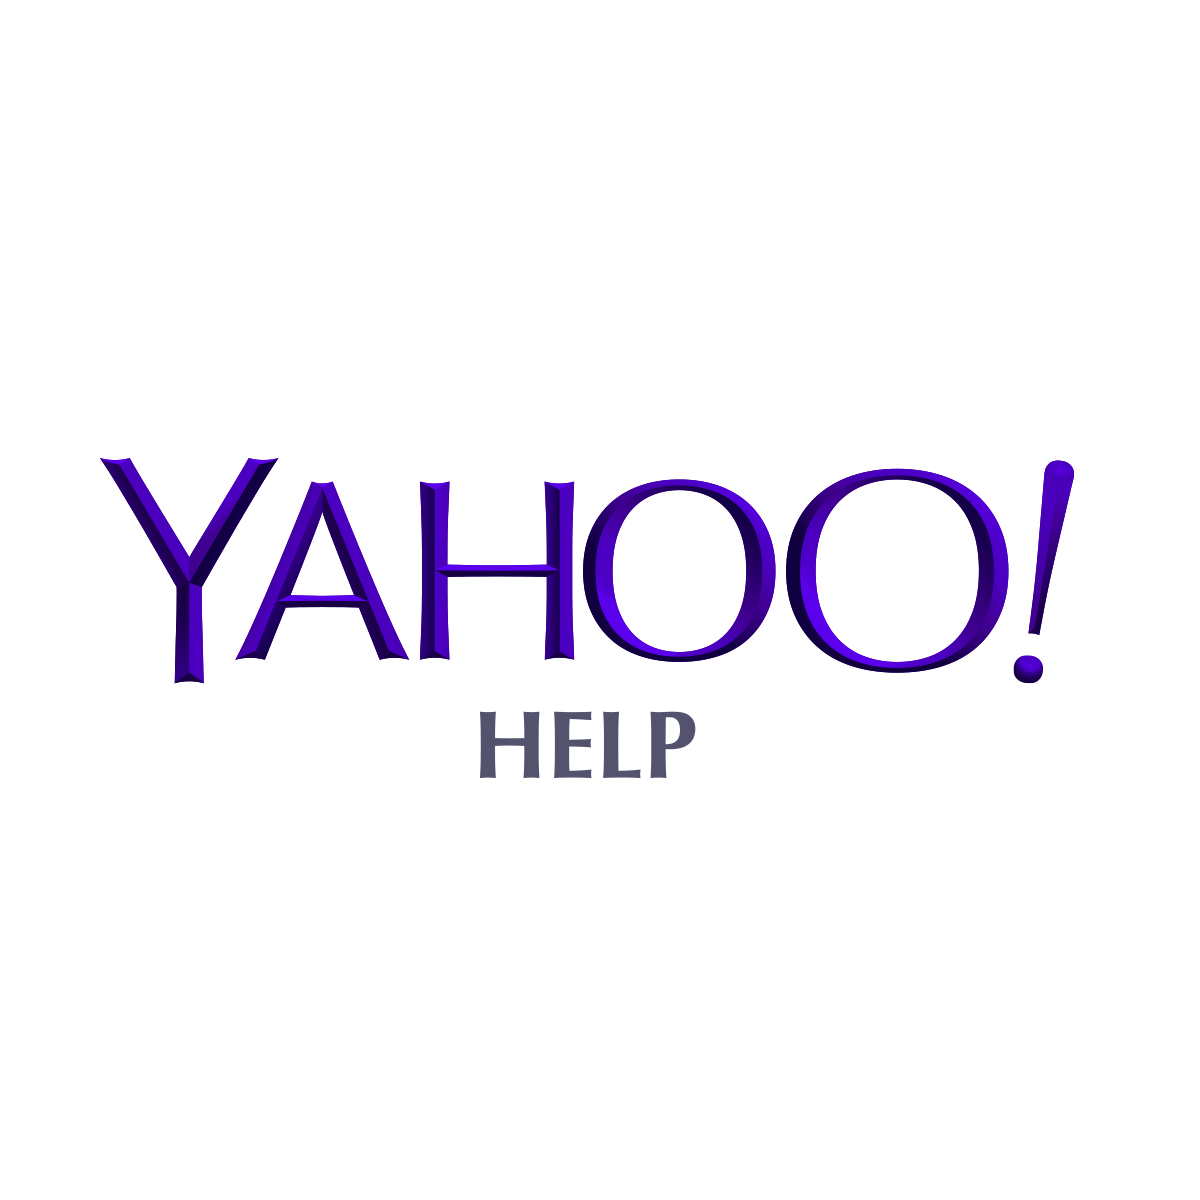 Yahoo.com Logo - Yahoo Messenger will be discontinued | Yahoo Help - SLN28776